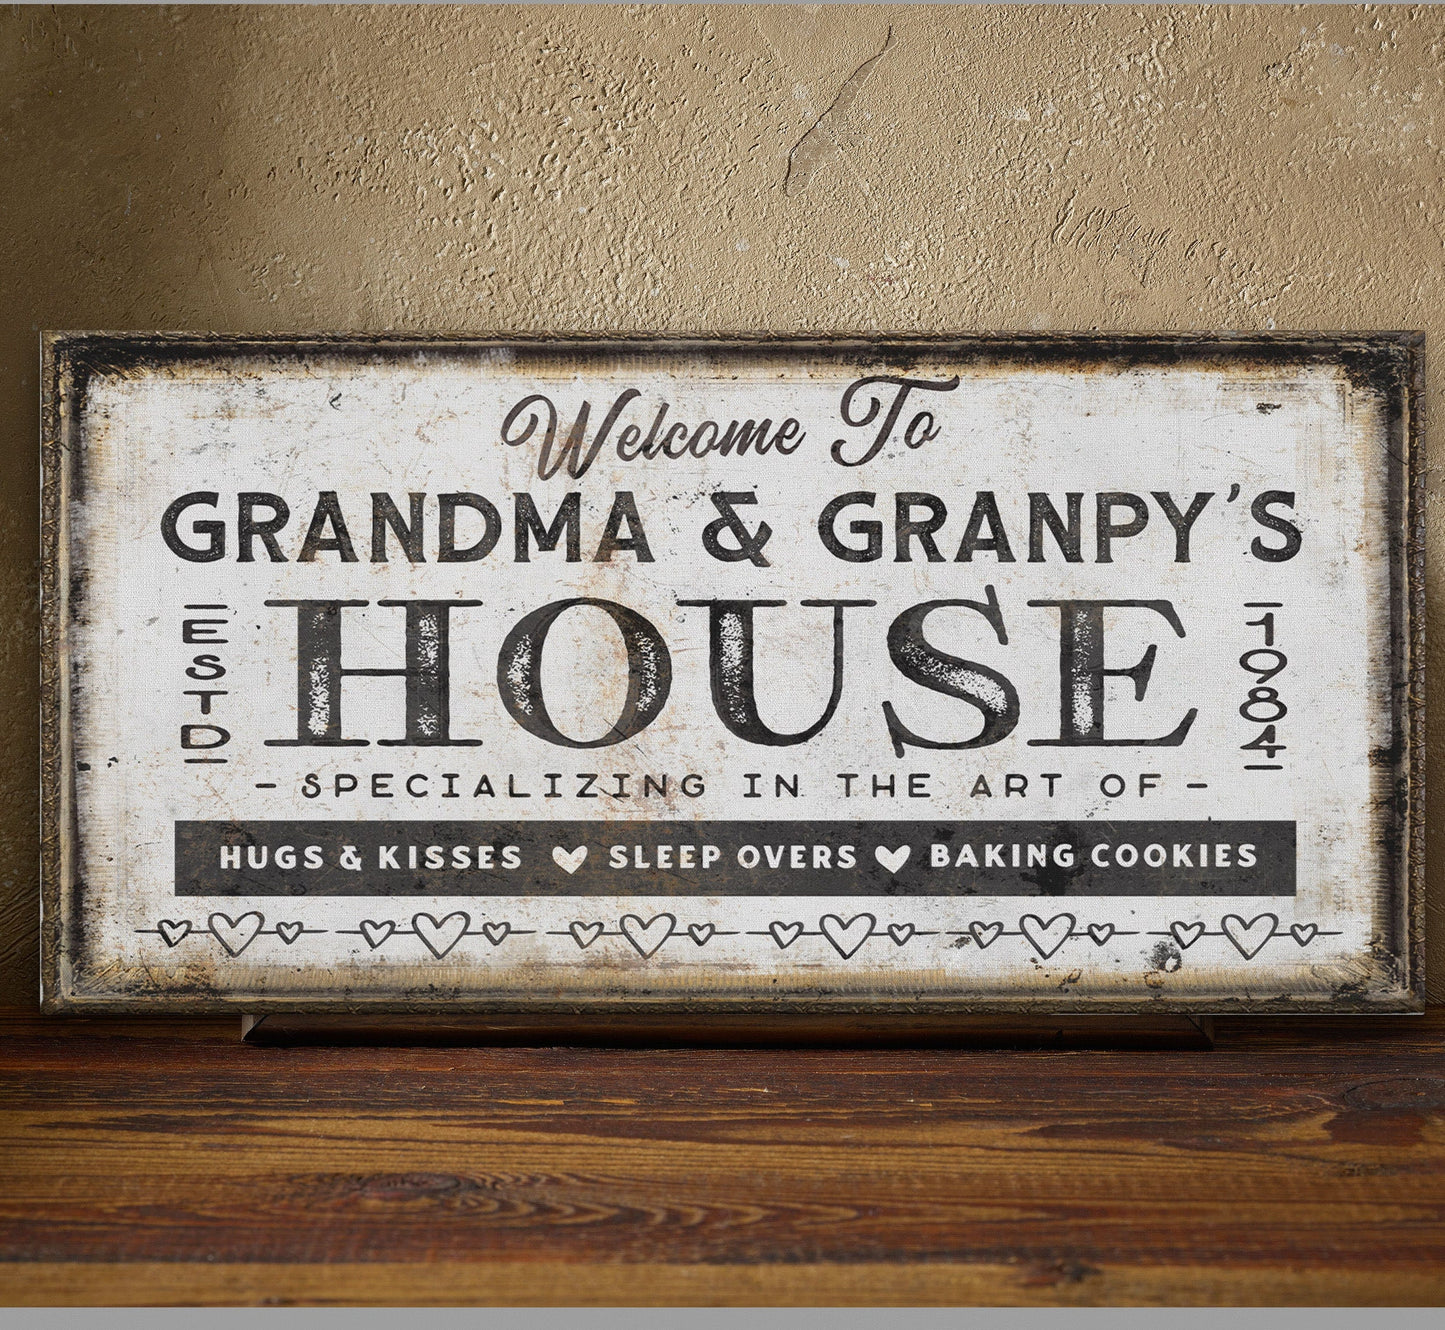 Grandma & Grandpas House Canvas Sign | Personalizable Grandparent Gift